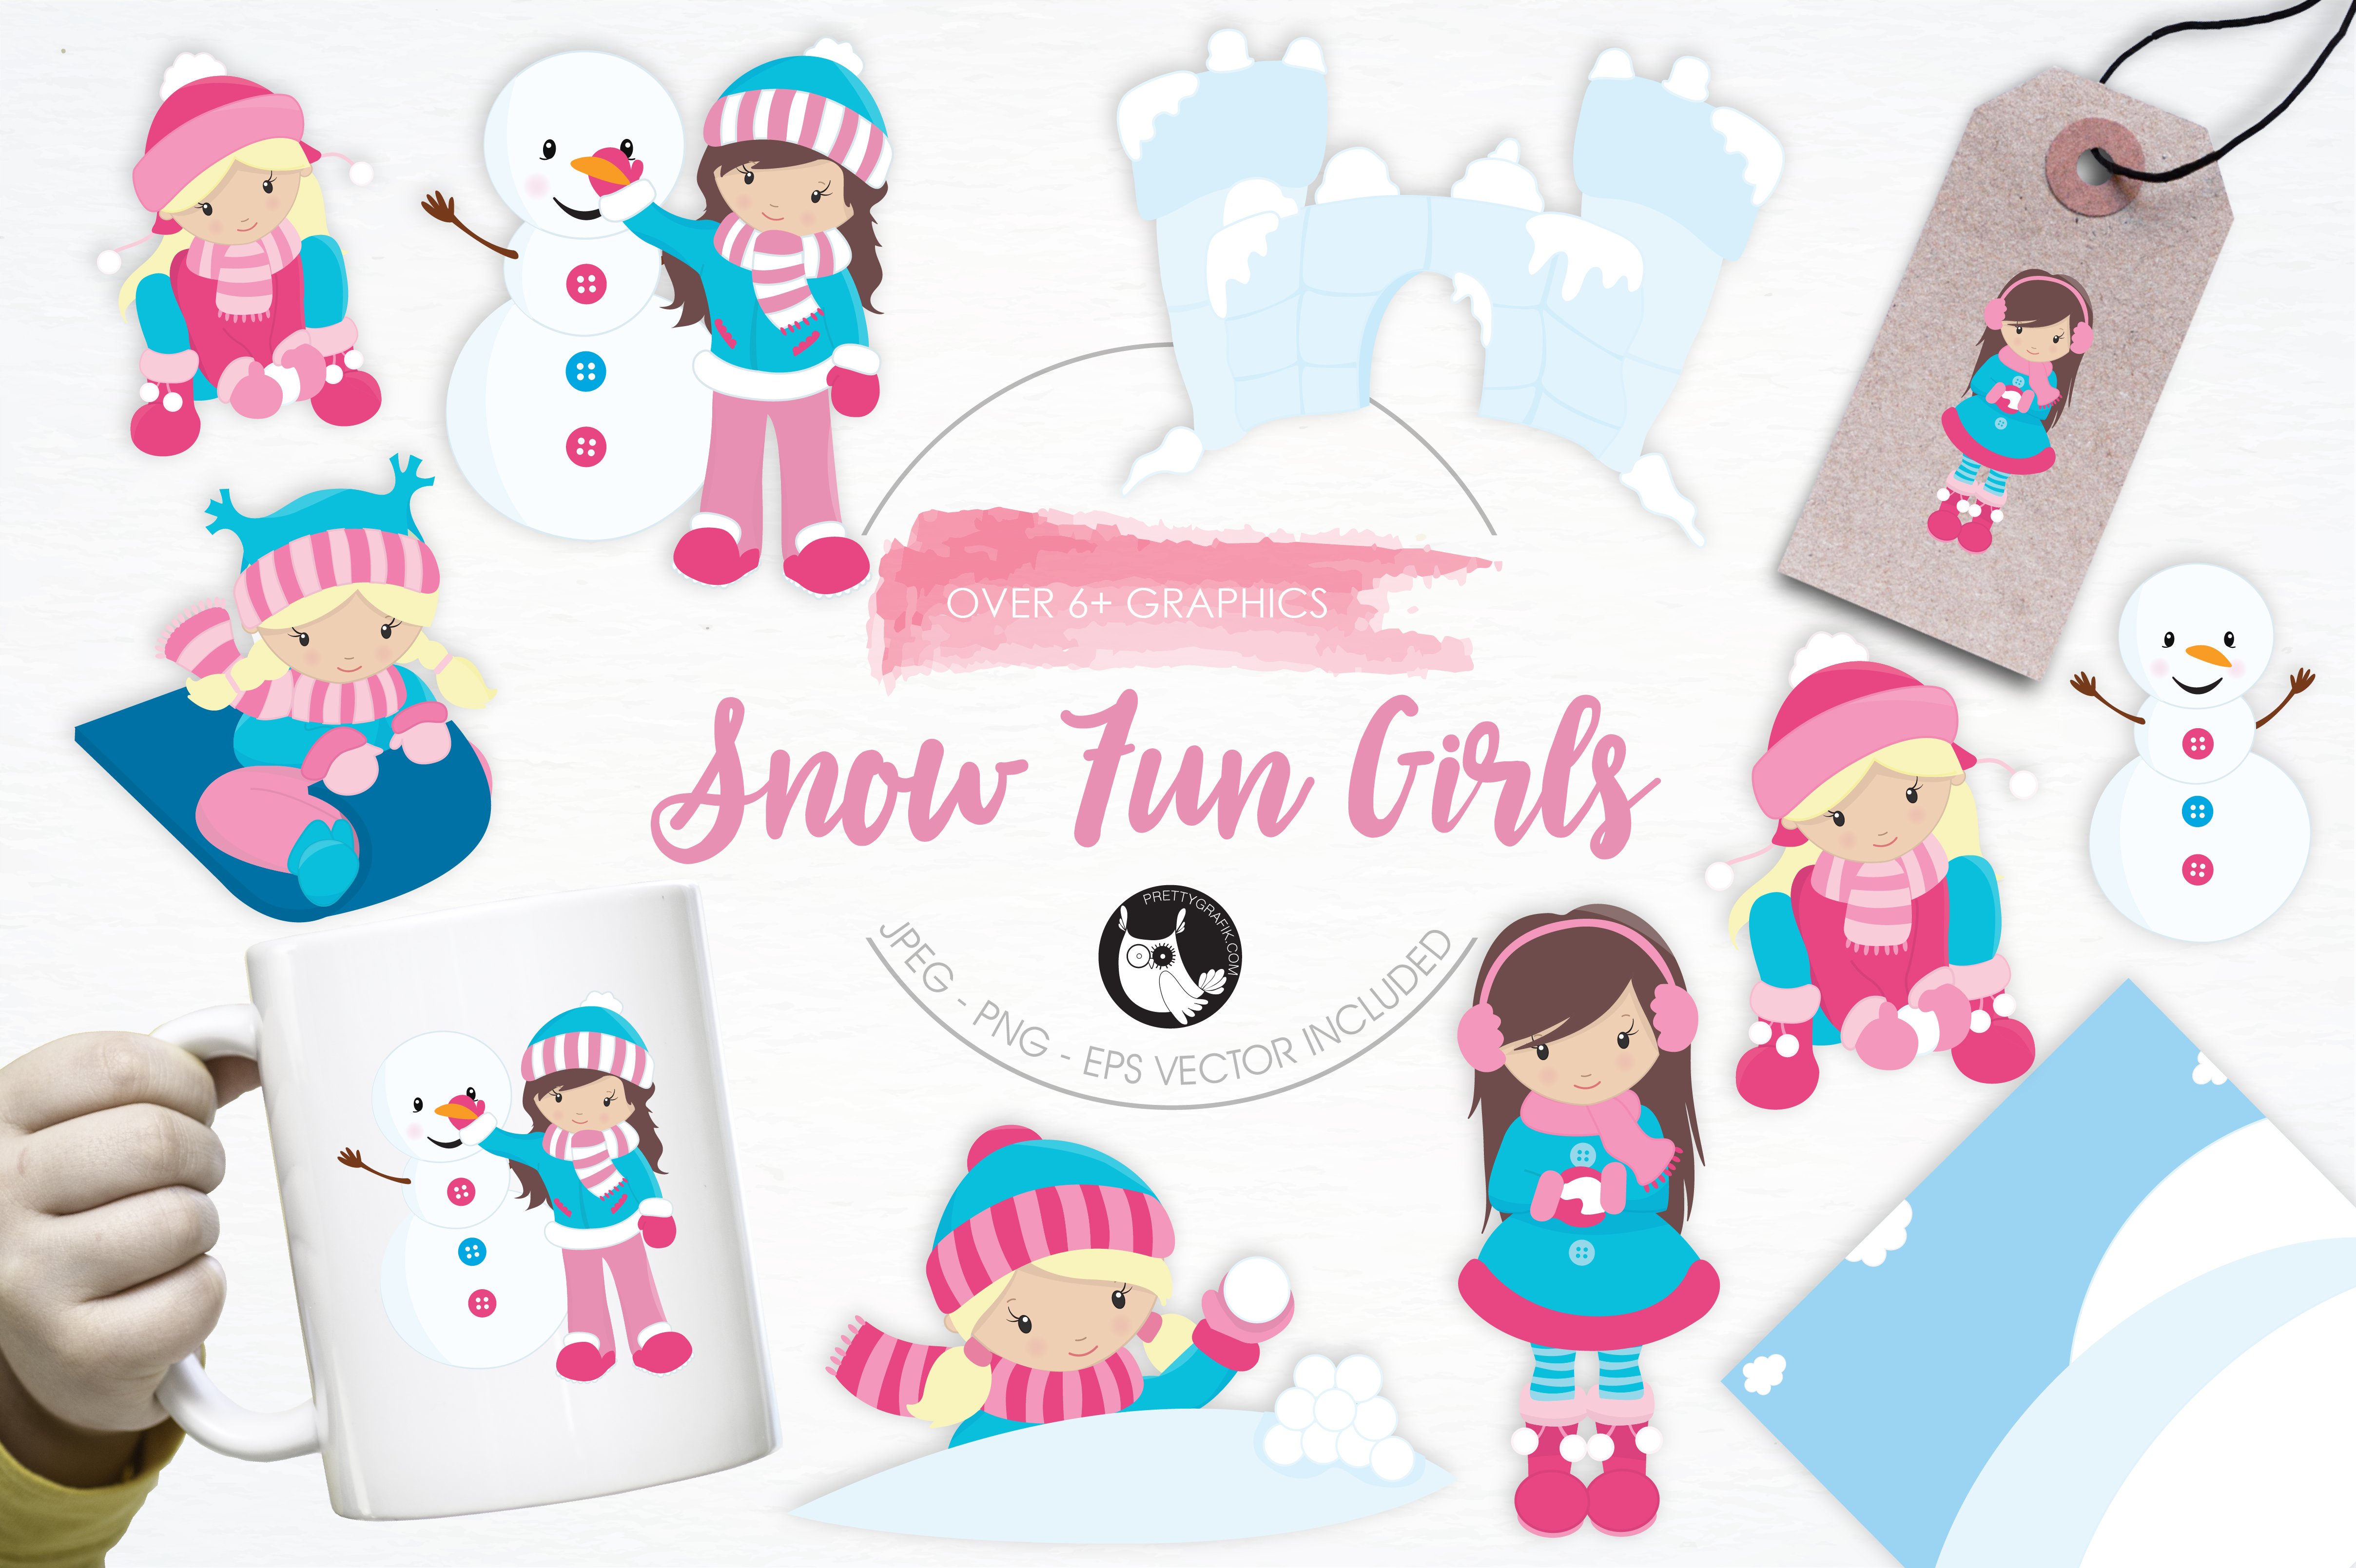 Snow Fun Girls illustration pack - Vector Image